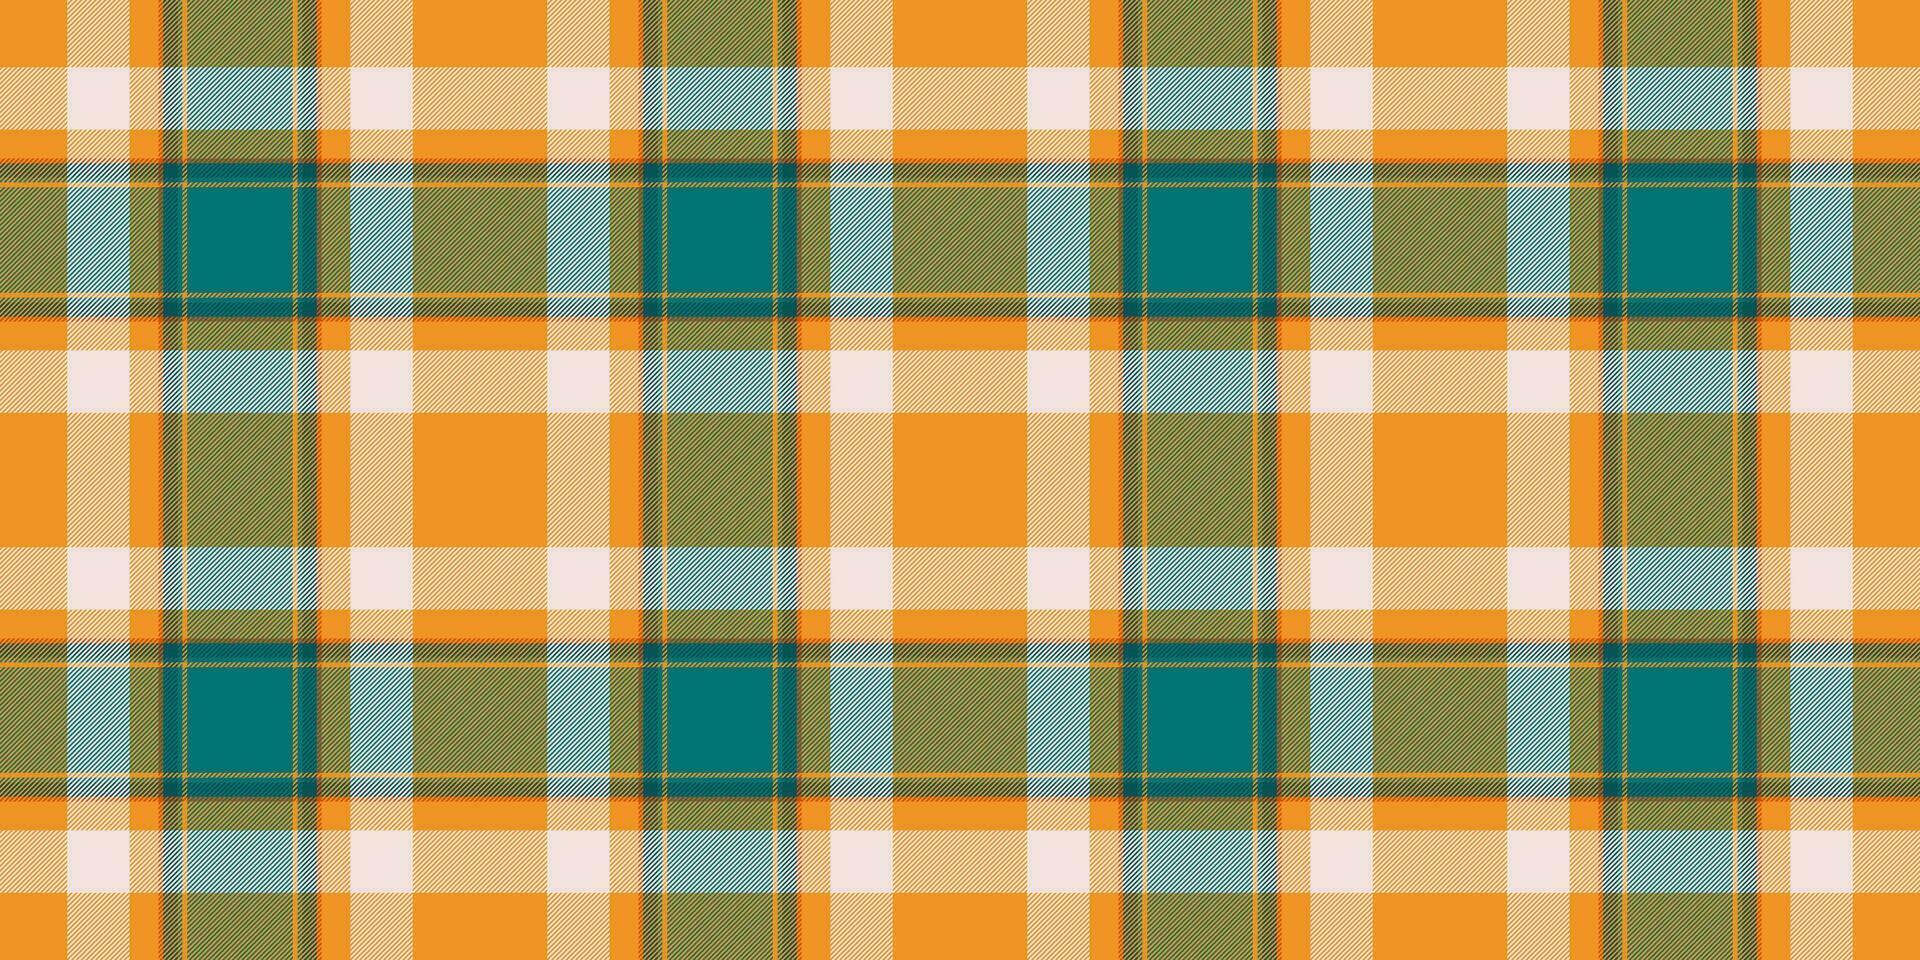 Internet desatado xadrez padrão, vestuário têxtil vetor fundo. pastel textura tartan Verifica tecido dentro cenoura laranja e ciano cores.